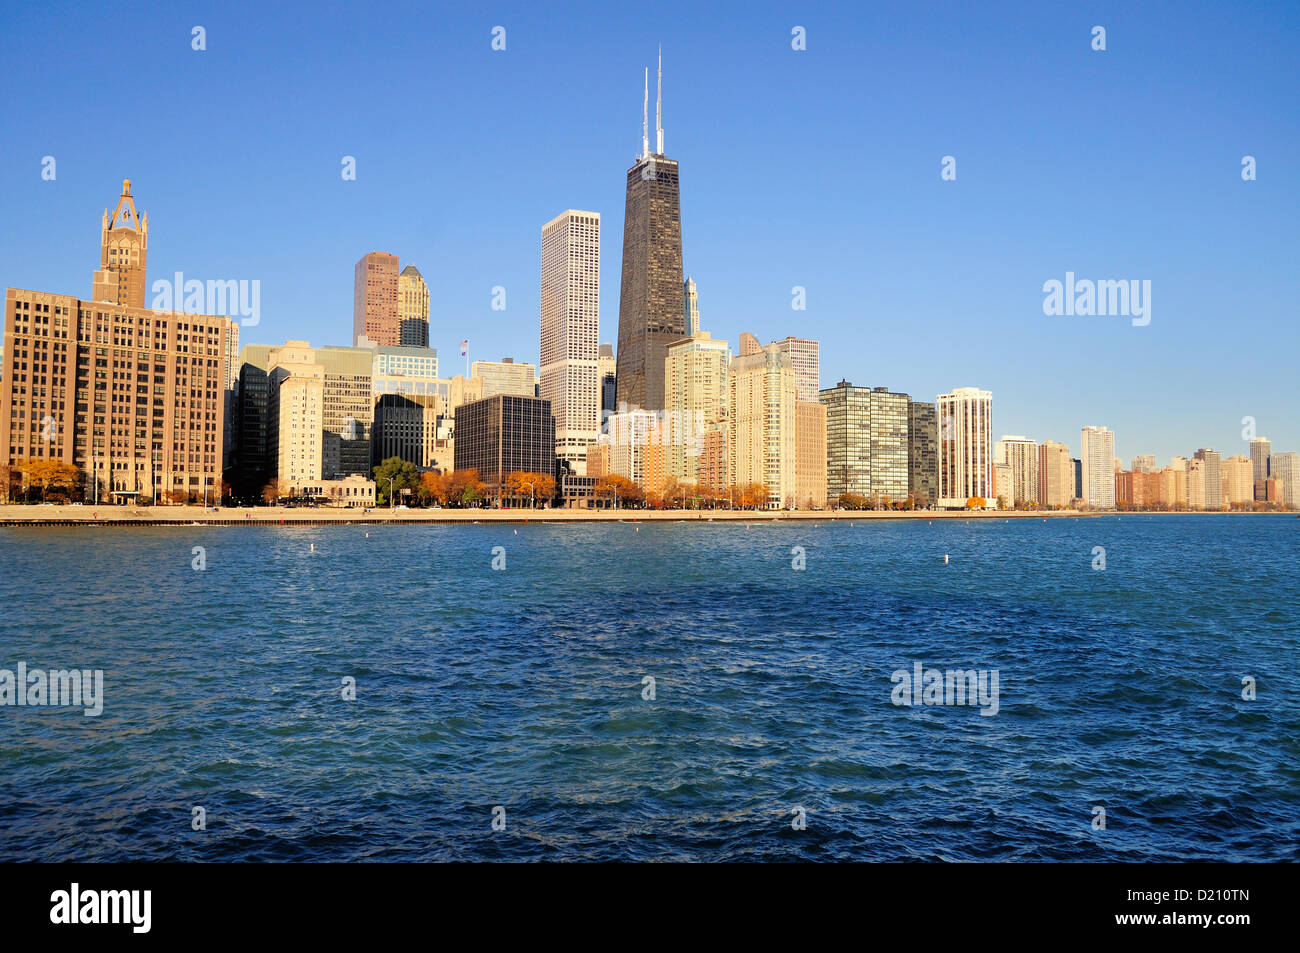 USA Illinois Chicago north Loop skyline John Hancock Building Water Tower Place Lake Michigan Stock Photo